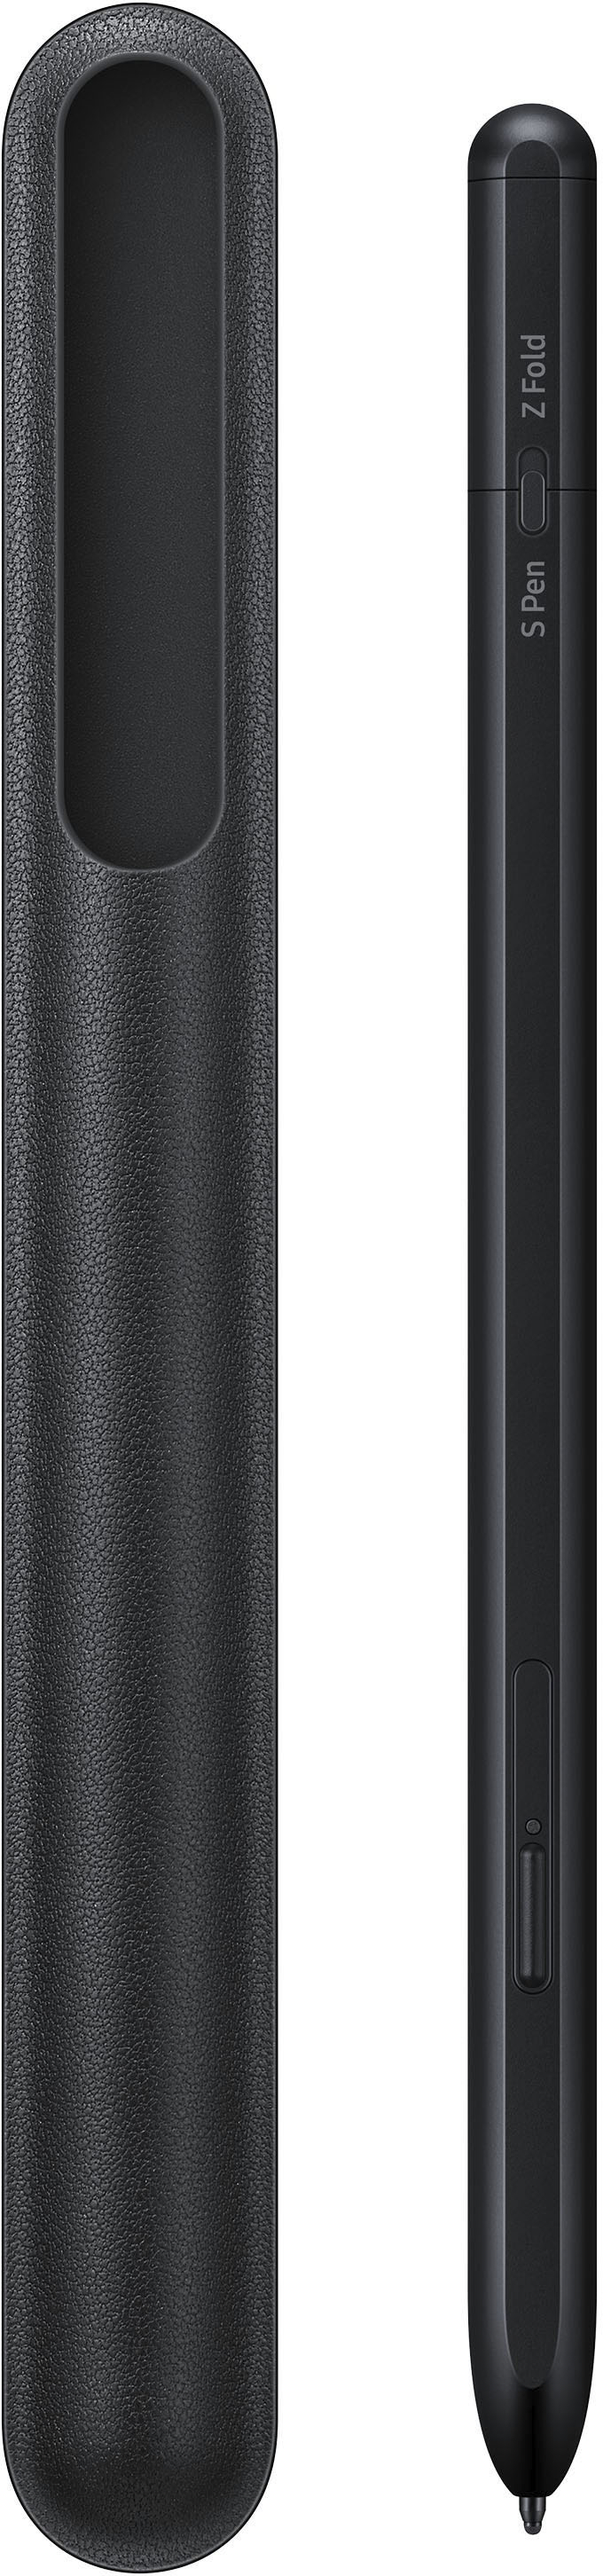 Samsung Galaxy S Pen (Fold Edition) Holder - Black